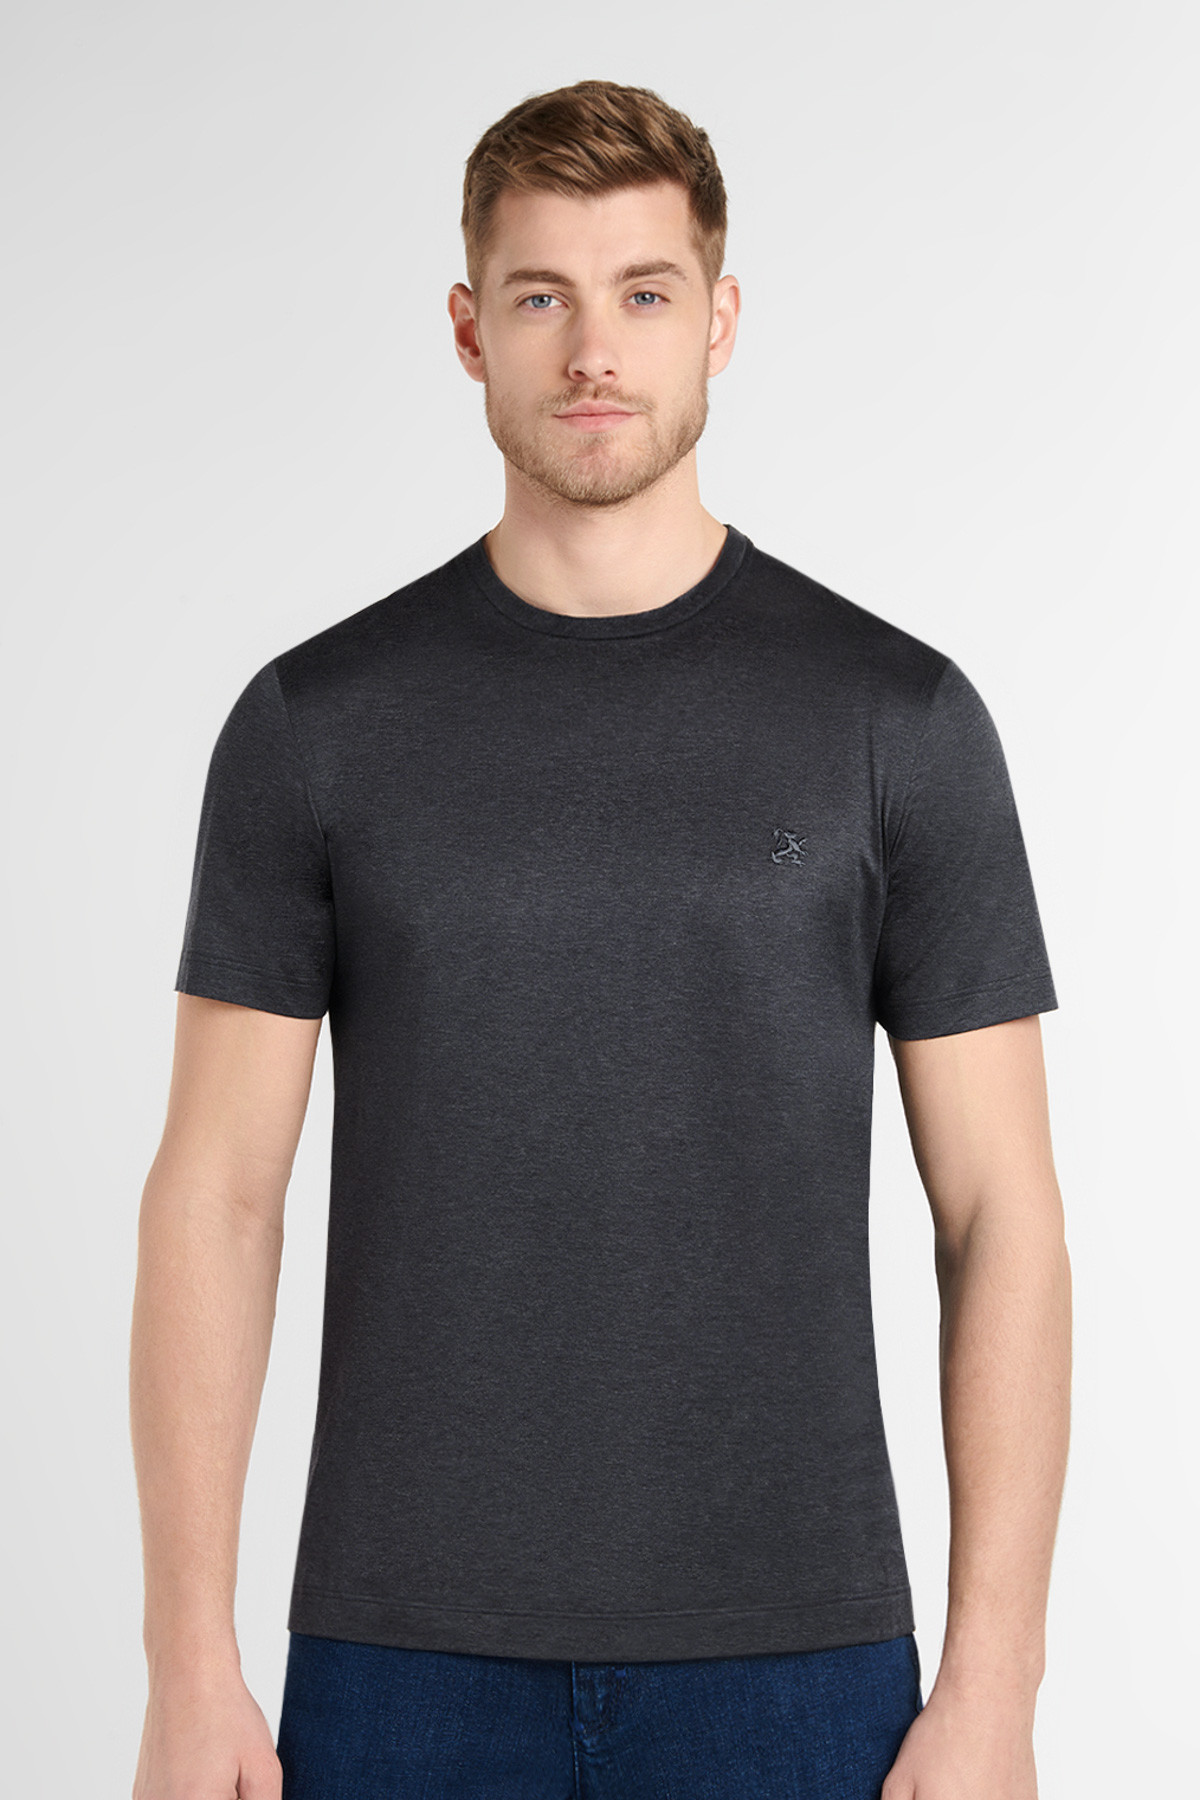 Charcoal grey T-shirt, 